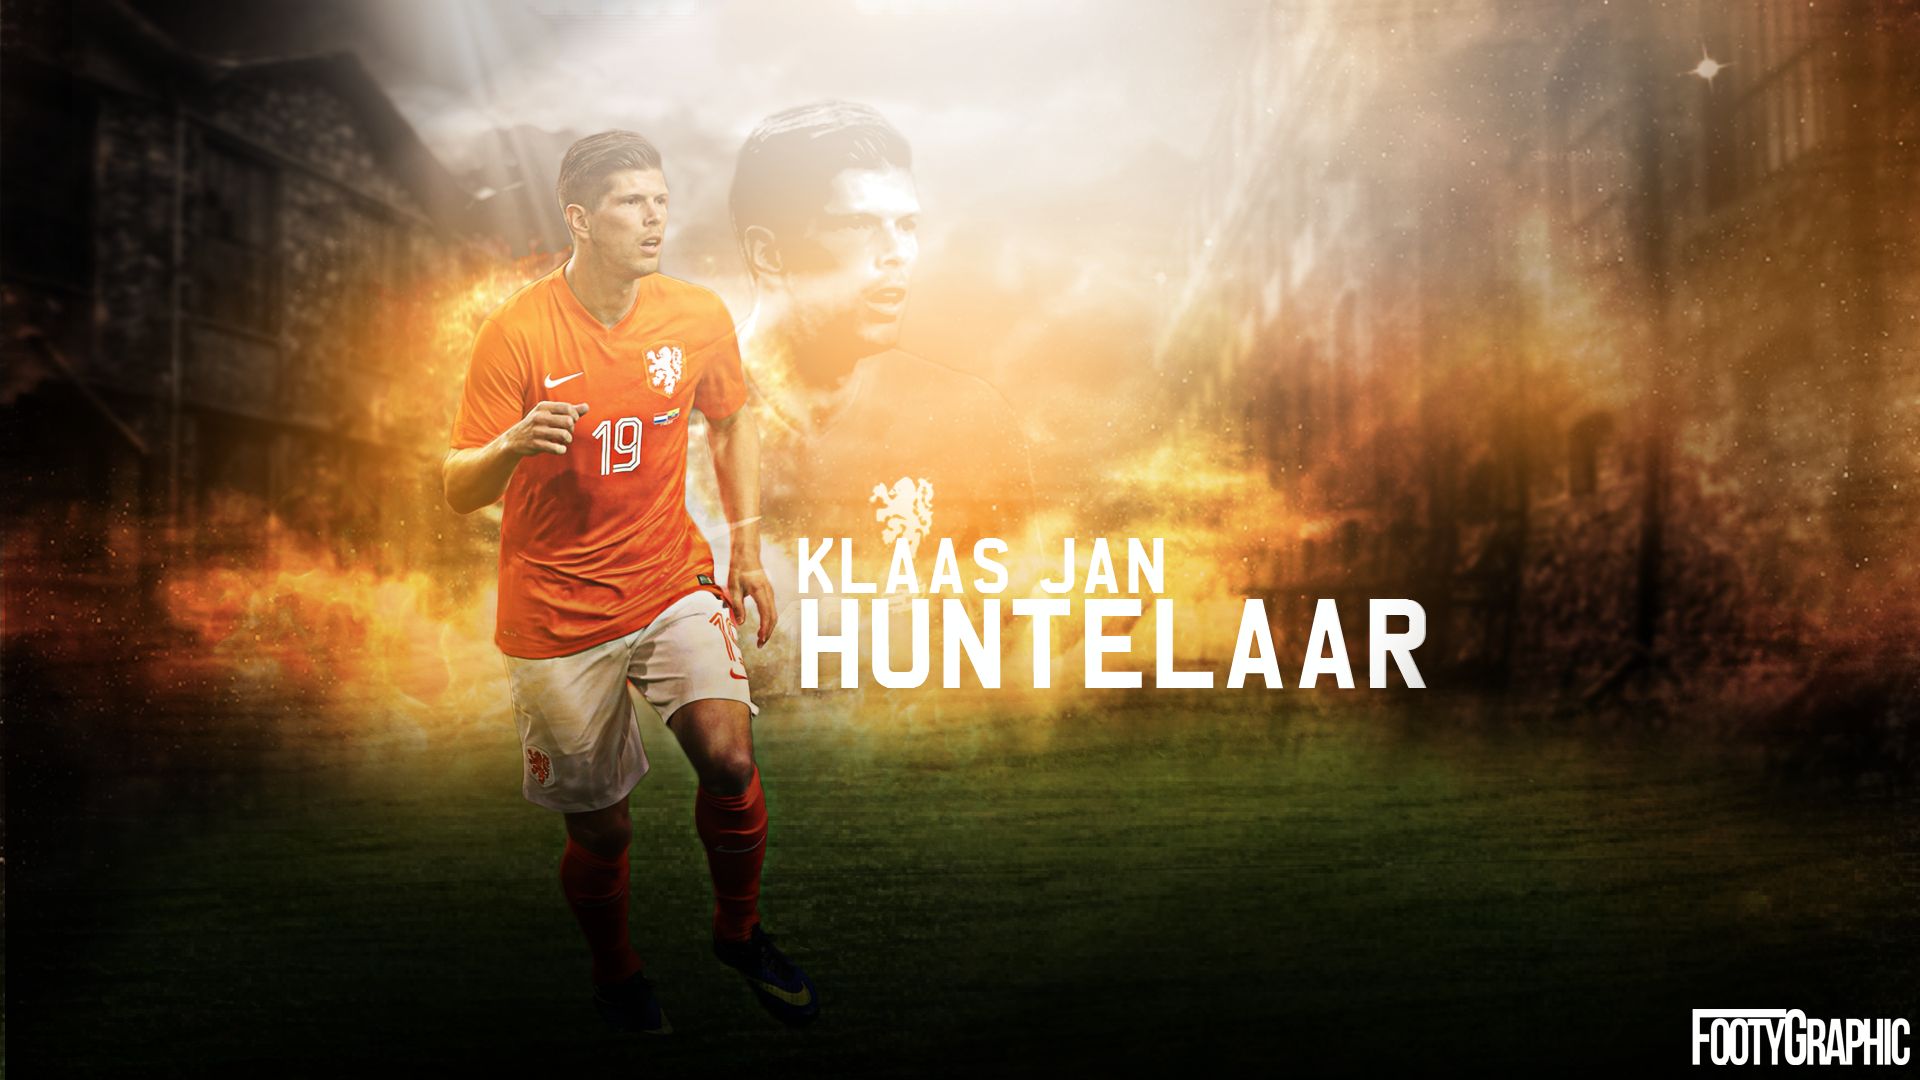 Die besten Klaas Jan Huntelaar-Hintergründe für den Telefonbildschirm